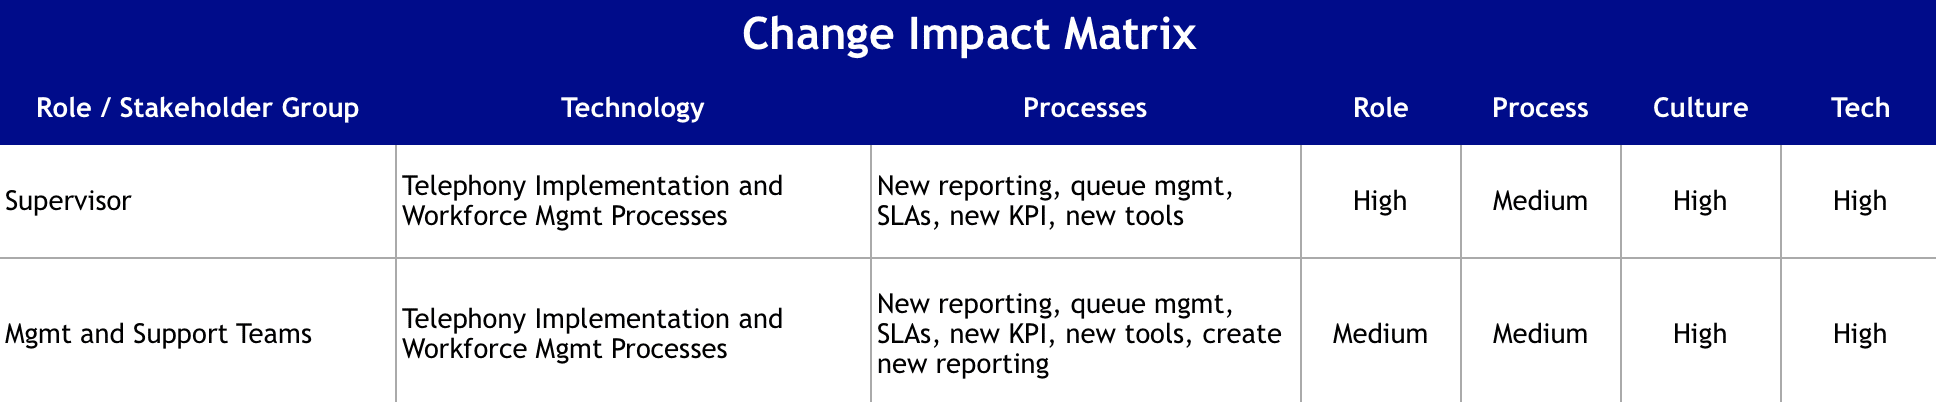 Change Impact Matrix